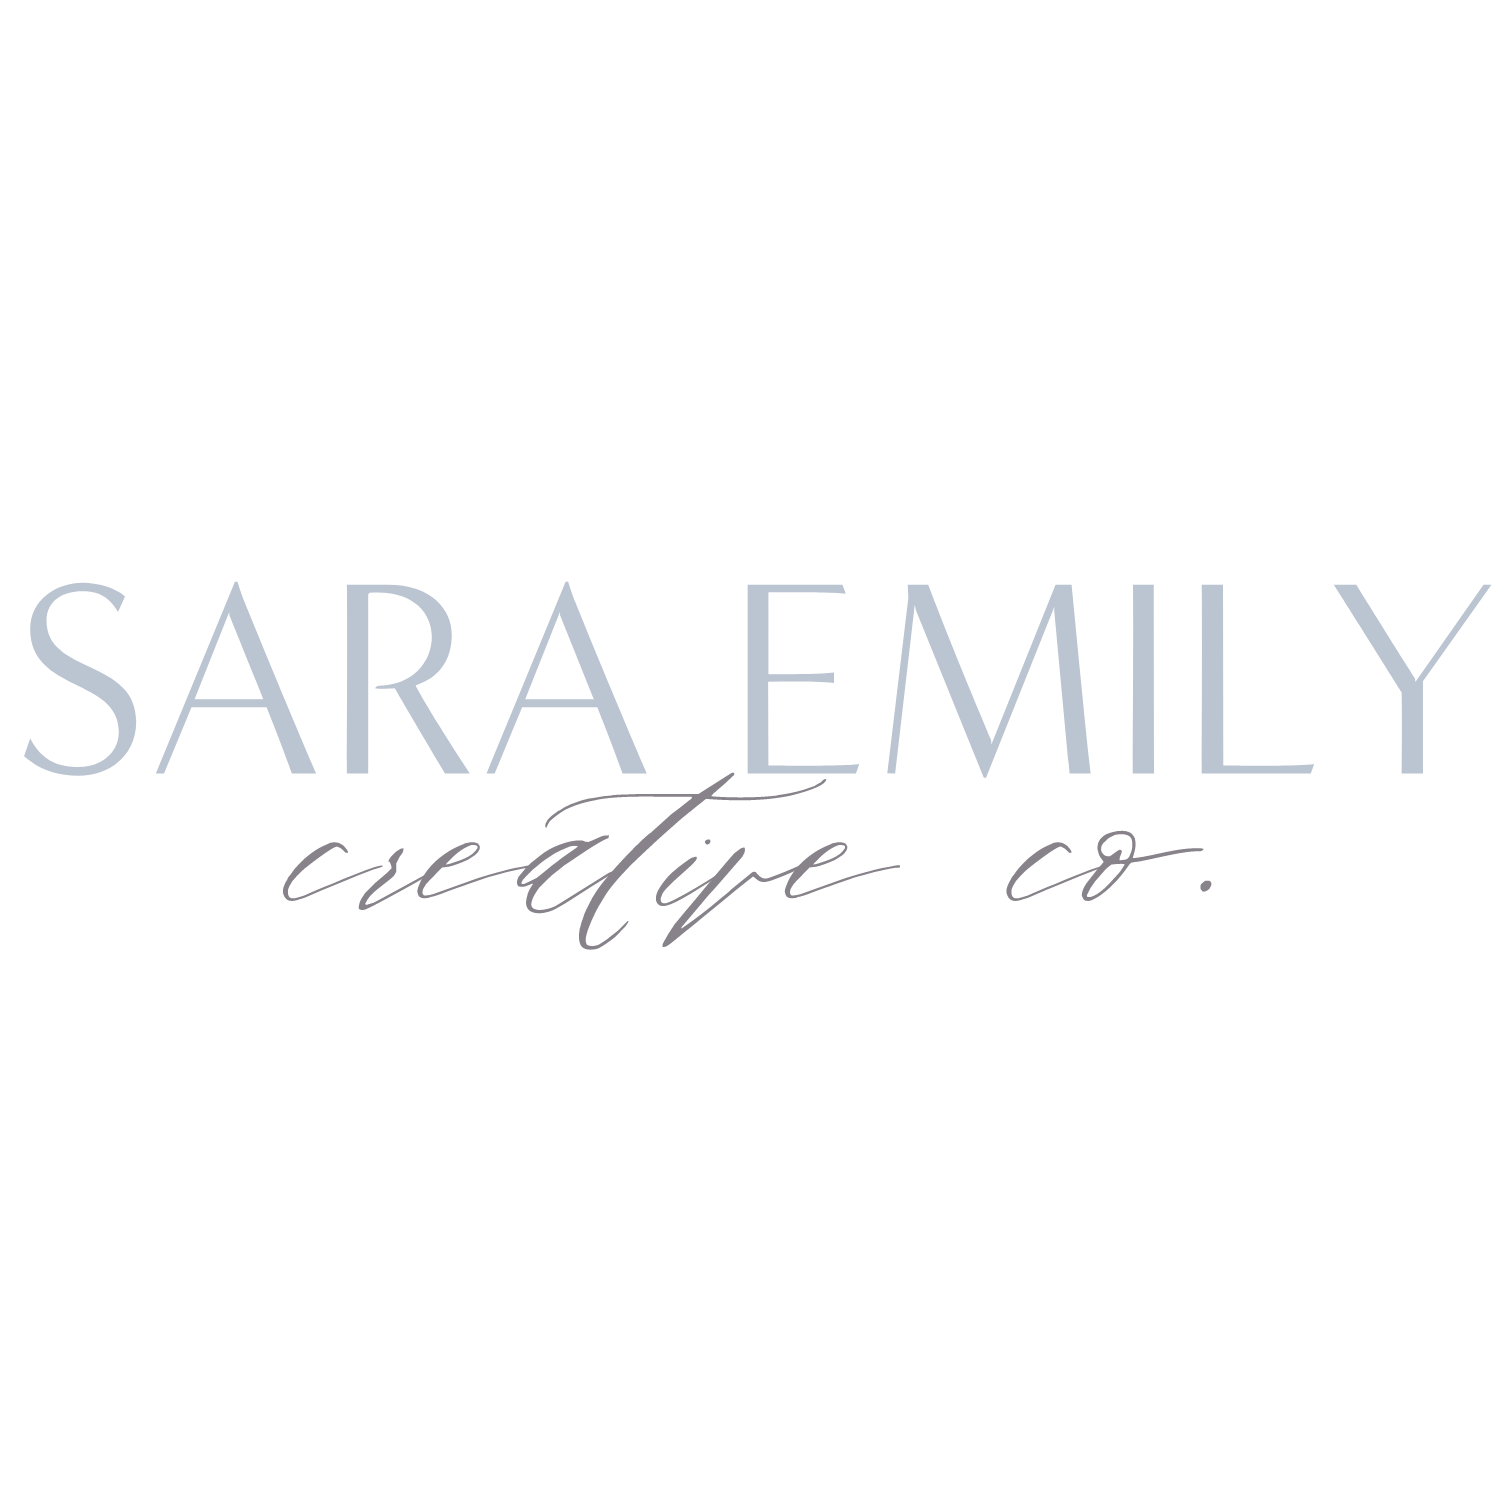 Sara Emily Creative Co.